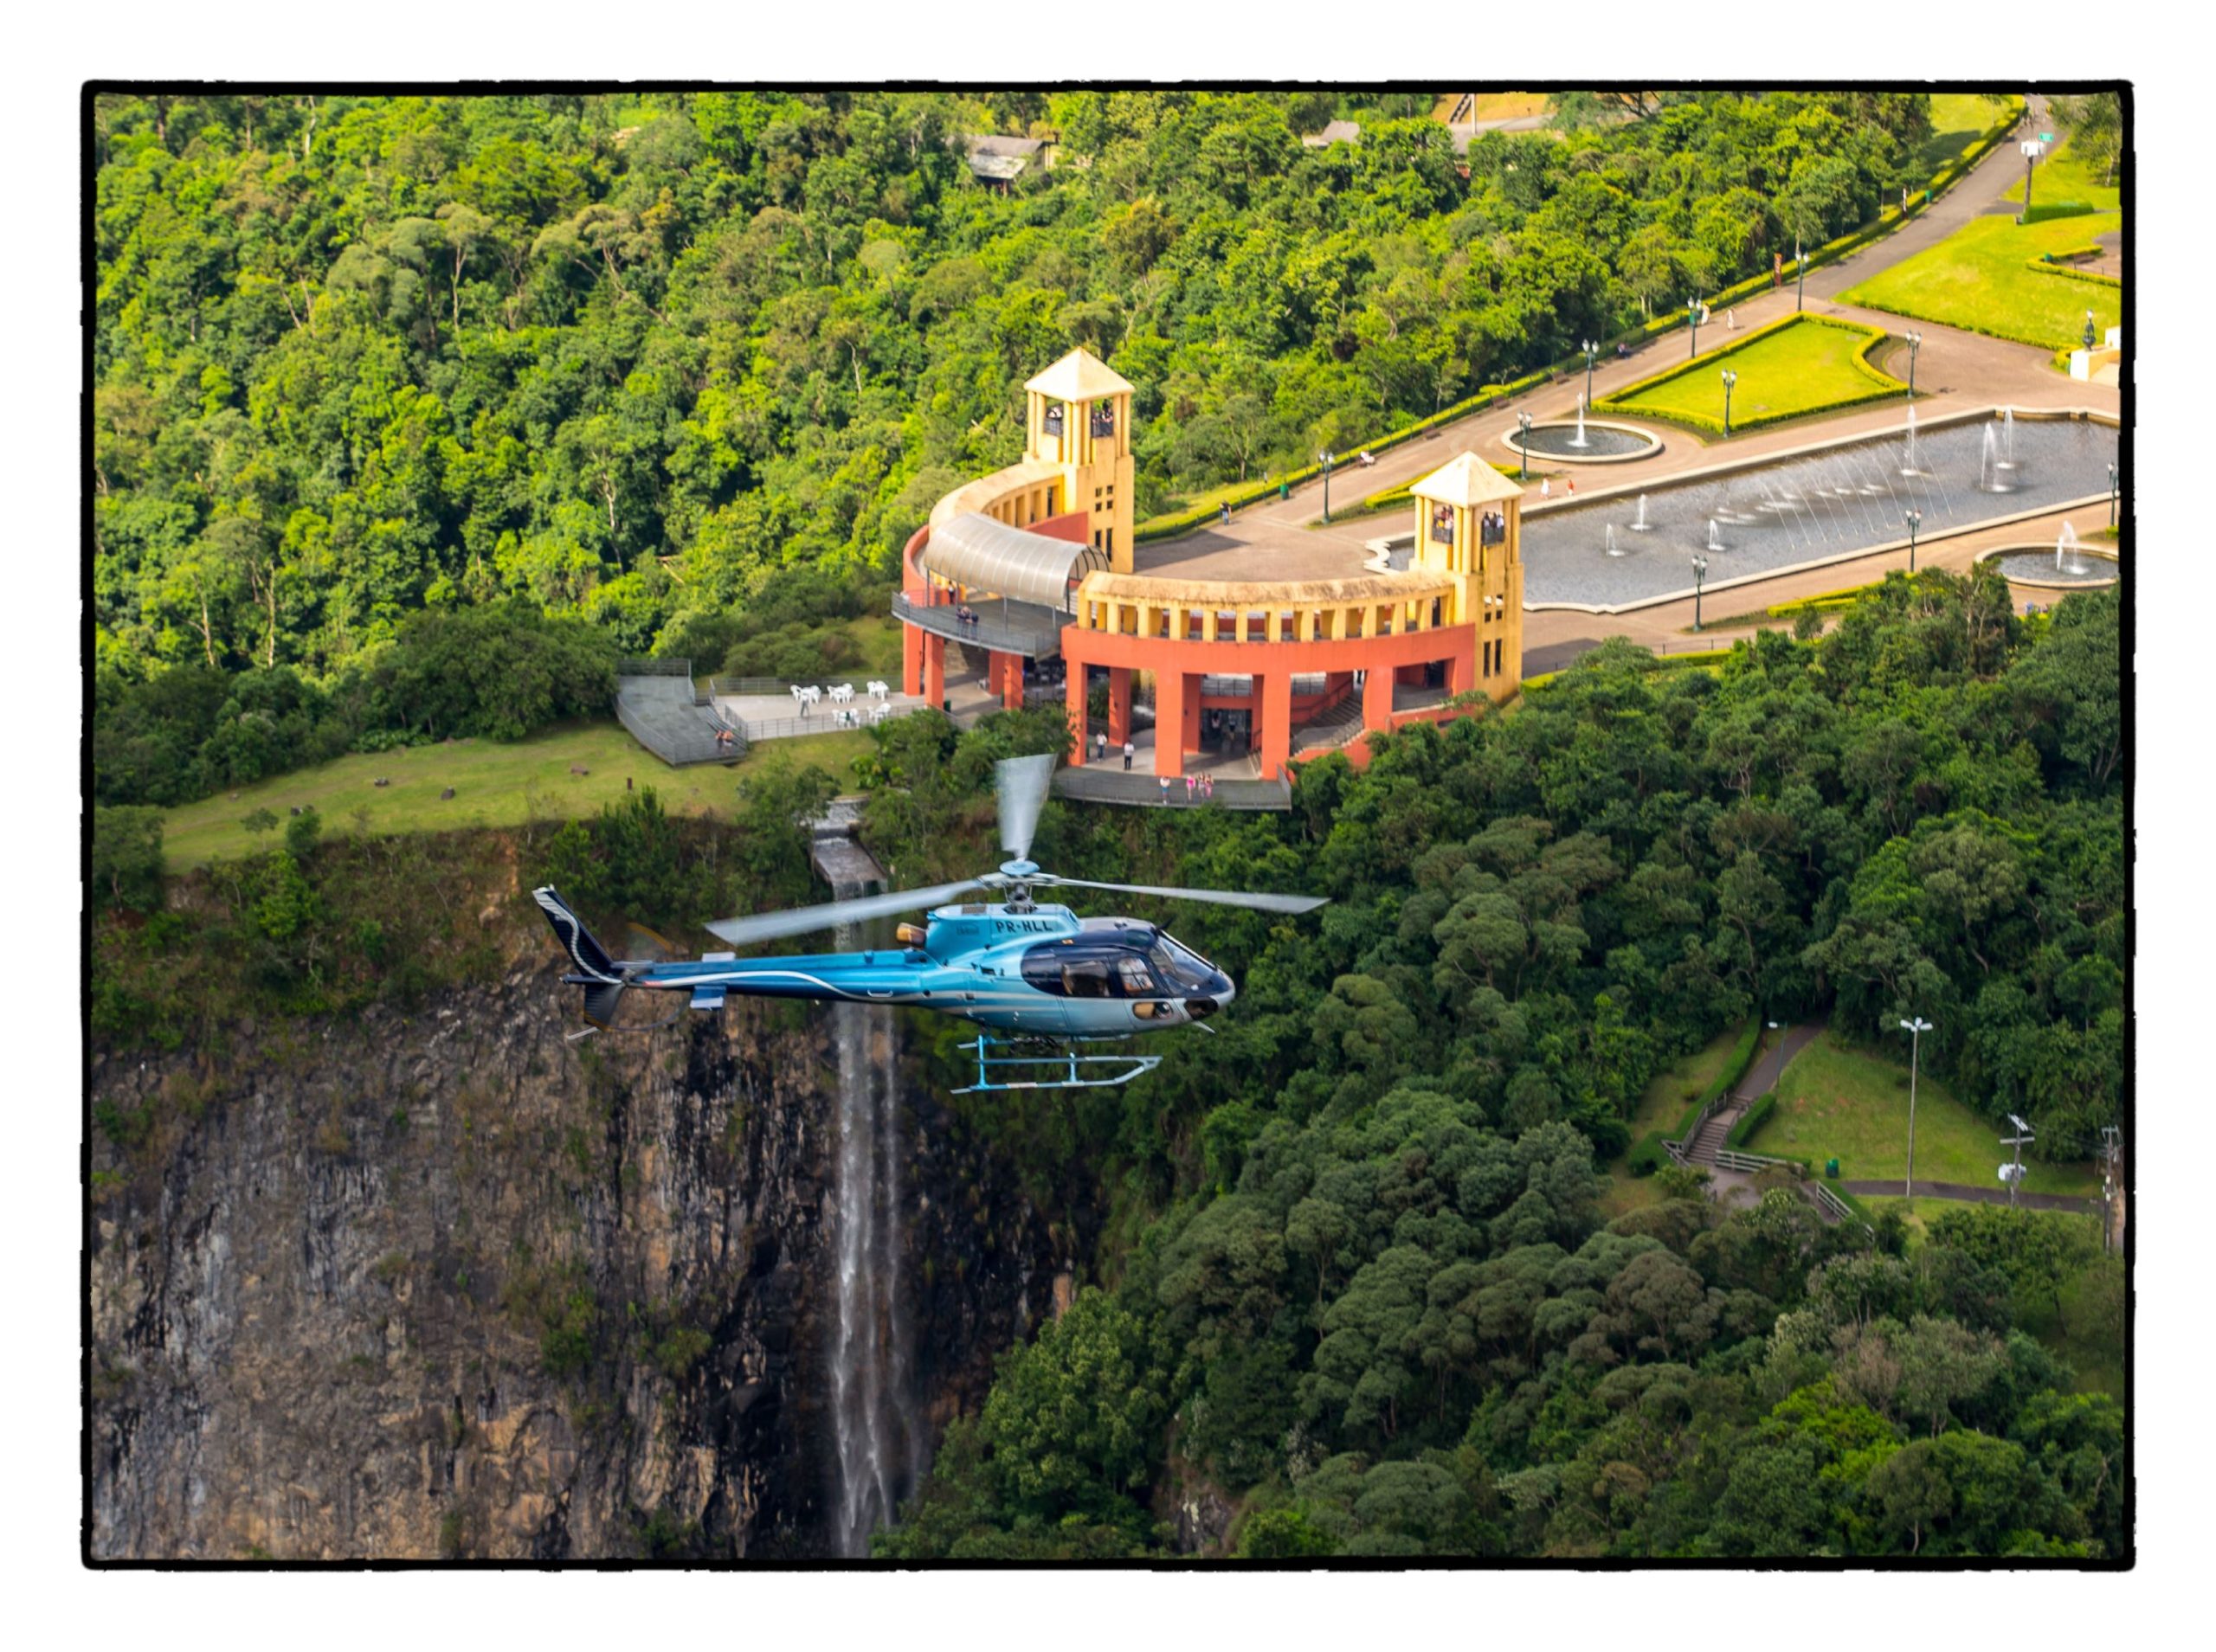 Voos panorâmicos de helicóptero voltam a emocionar em Curitiba